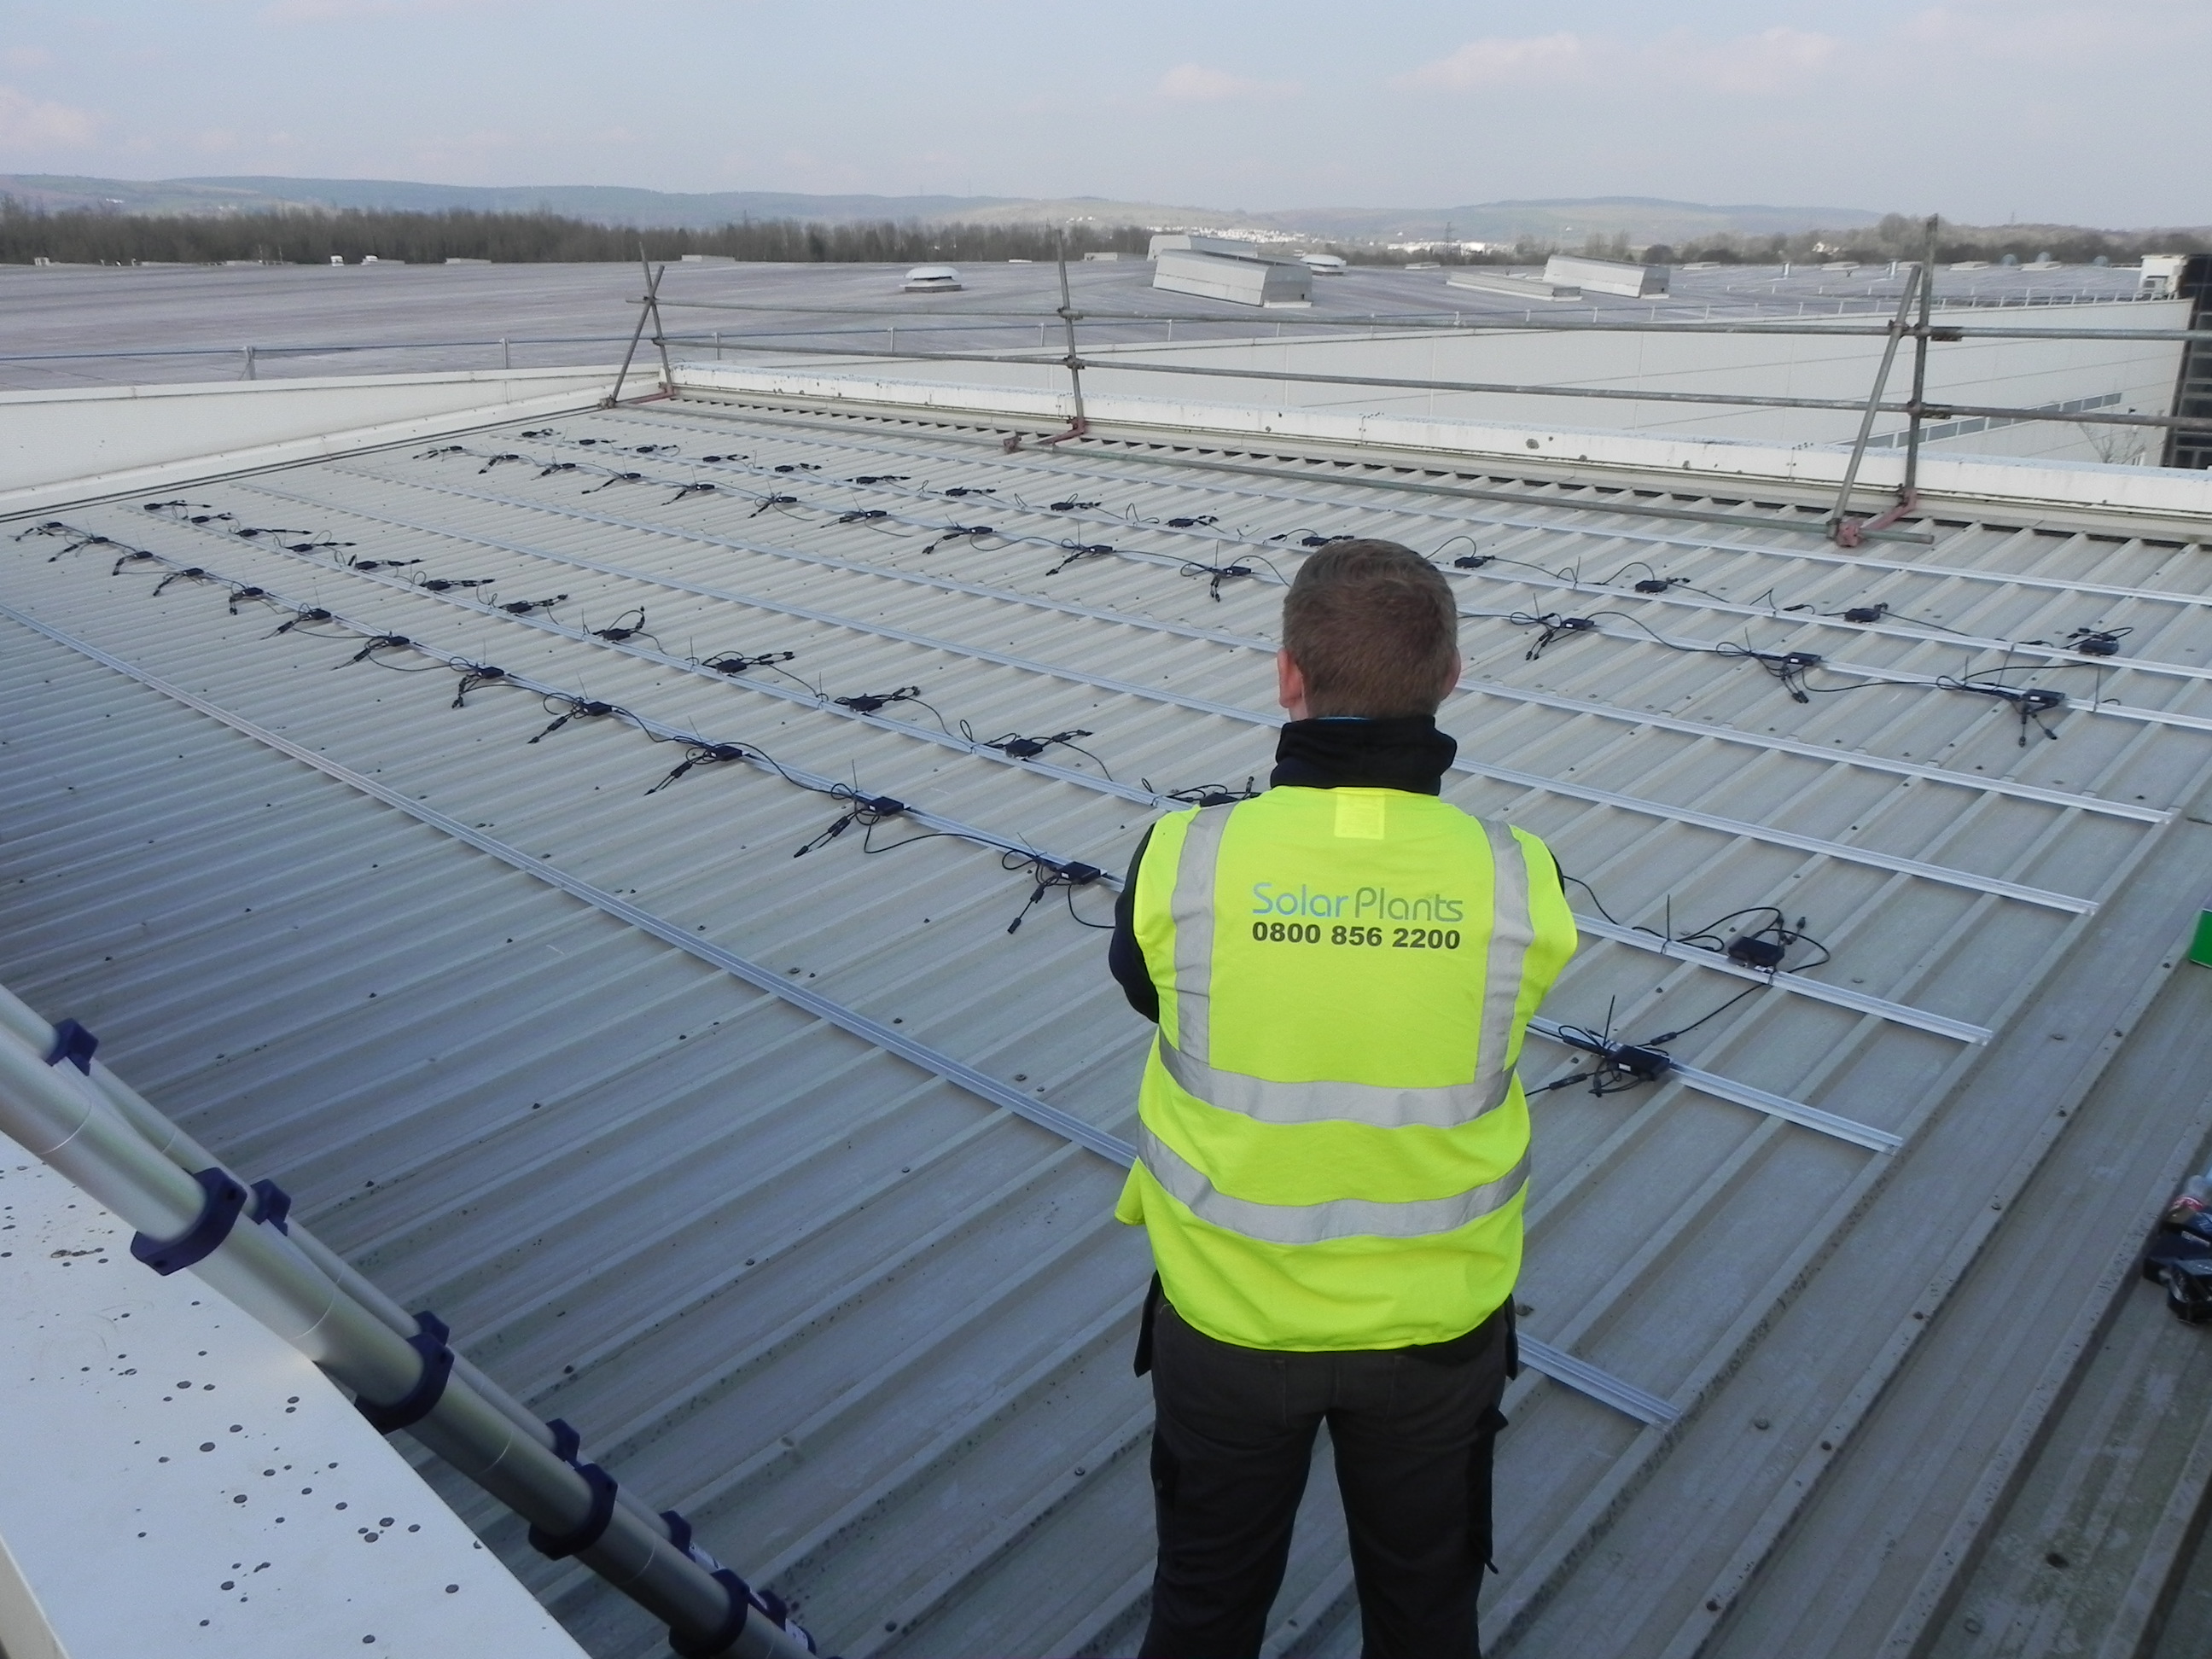 Solar Plants installing SolarEdge’s DC optimized inverter solution at Sony UK Technology Centre